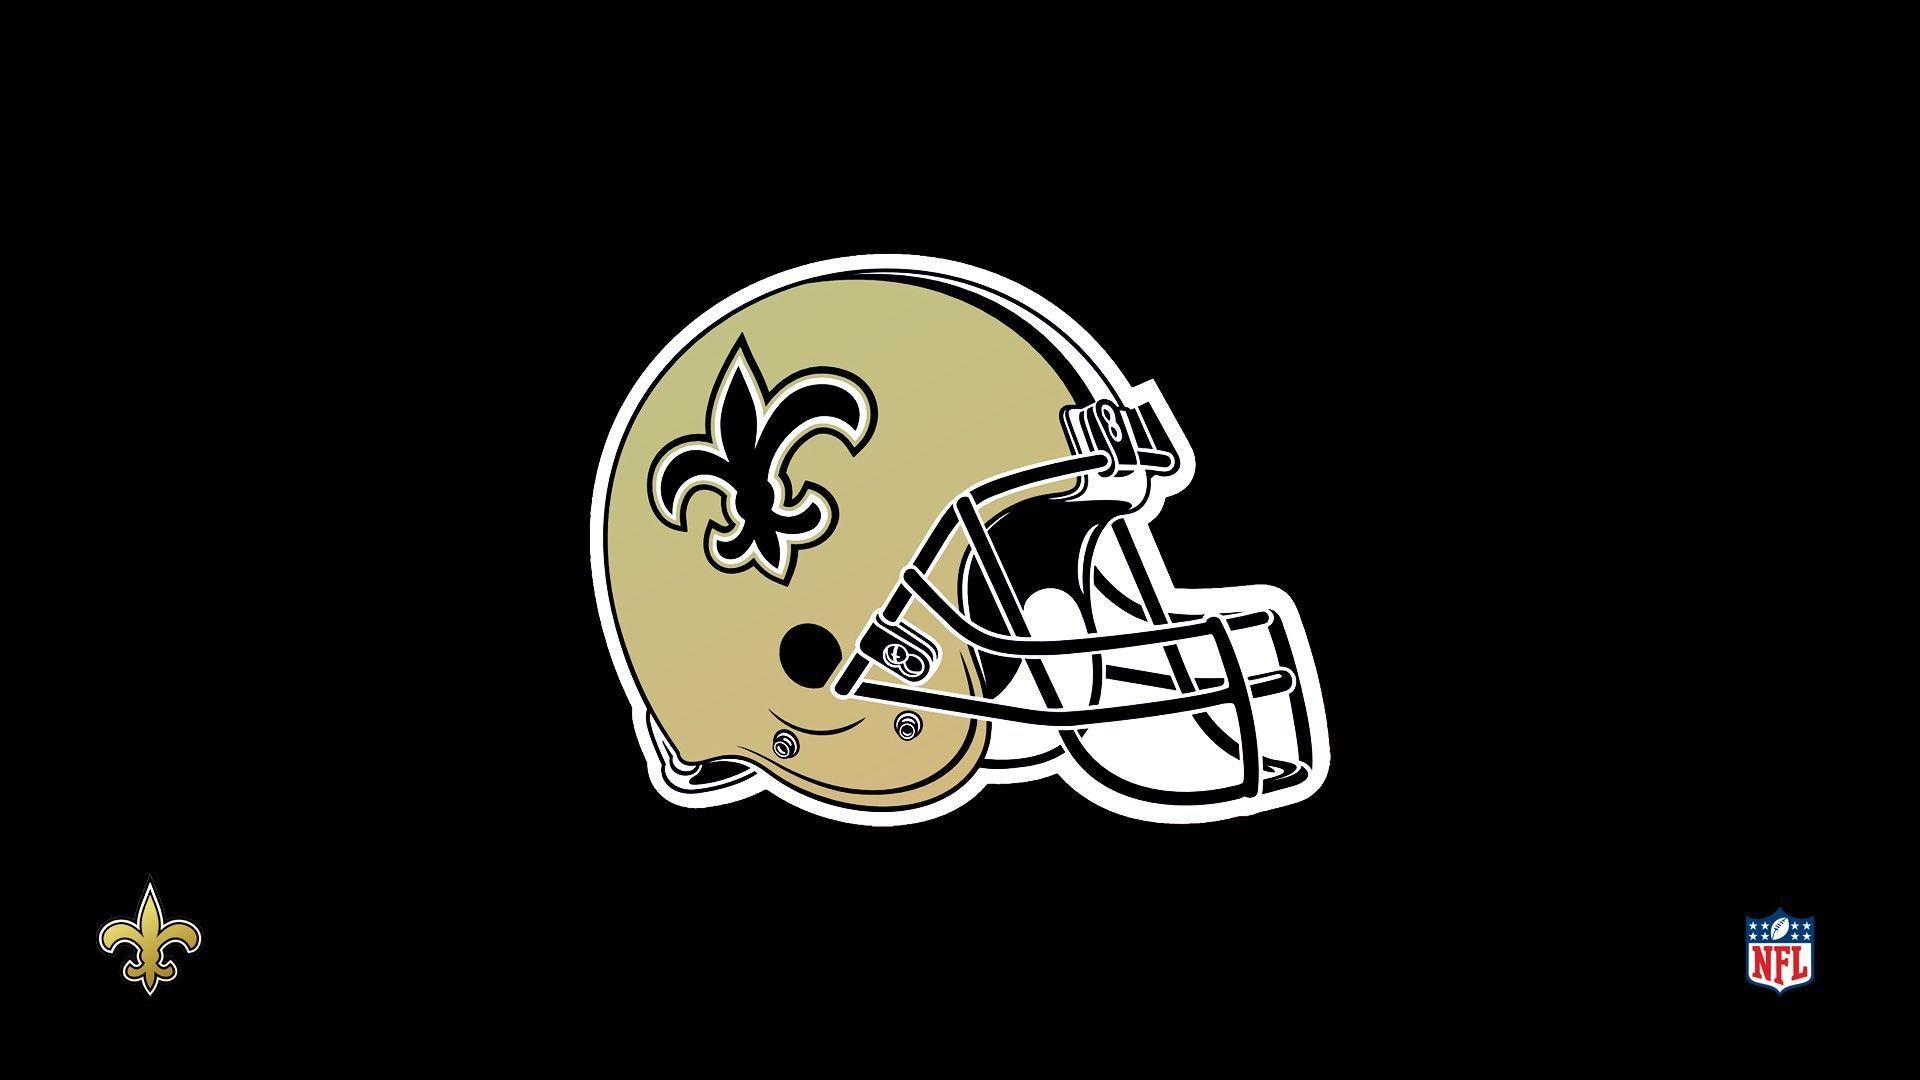 NFL New Orleans Saints Logo Helmet wallpapers HD 2016 in Football